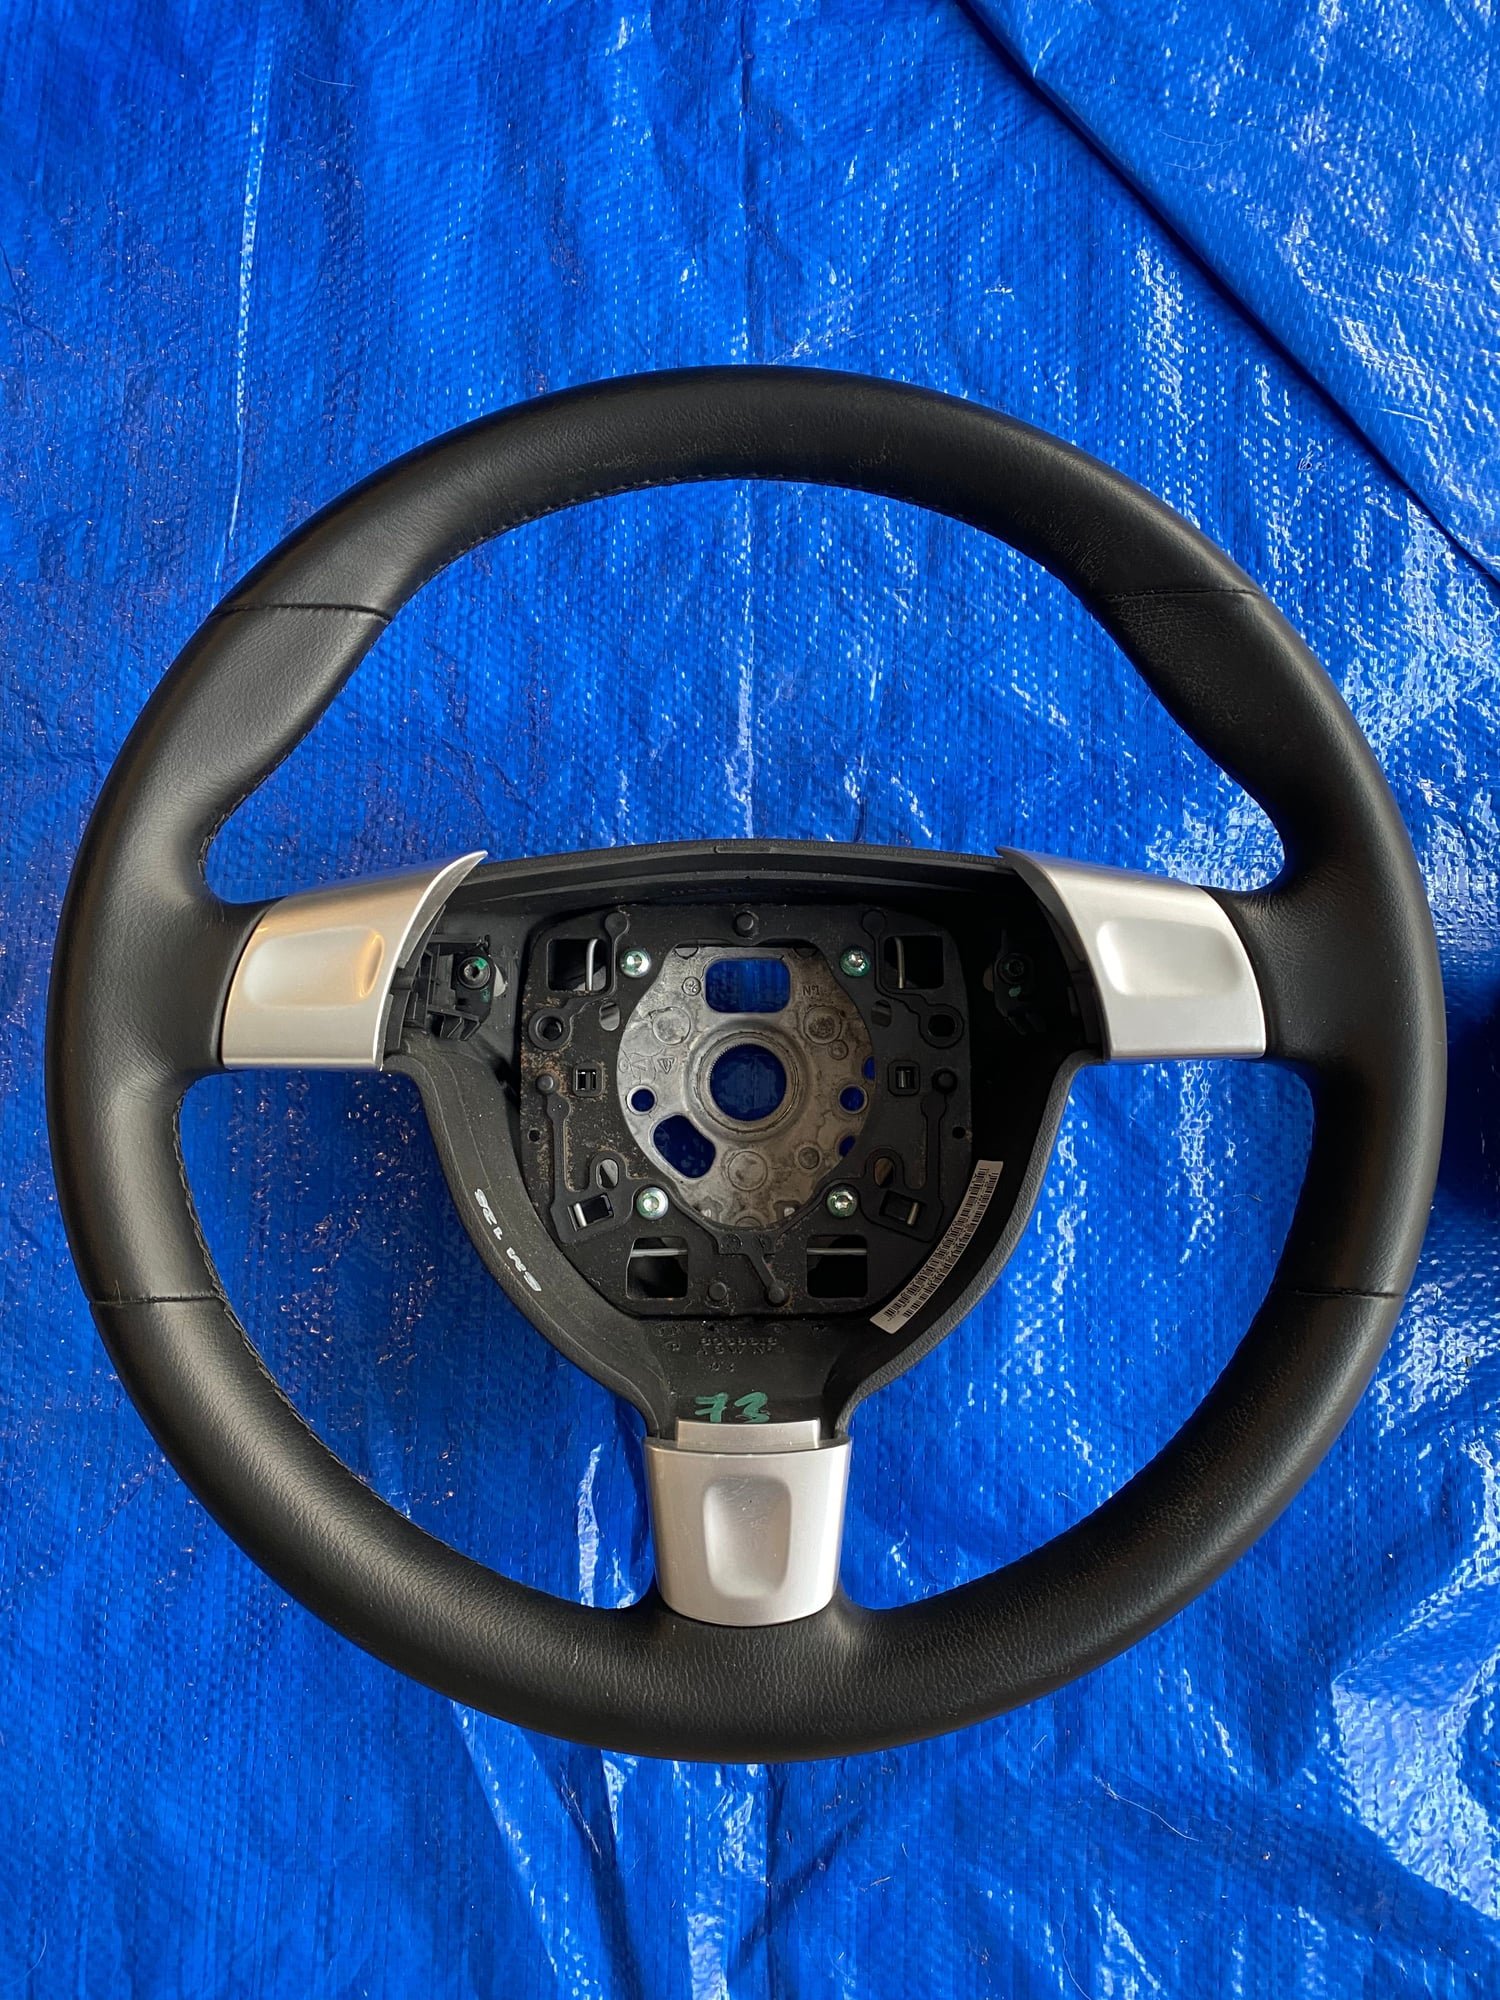 2006 Porsche Cayman - 997/987 Sport Steering Wheel & Airbag - Interior/Upholstery - $900 - Denver, CO 80204, United States